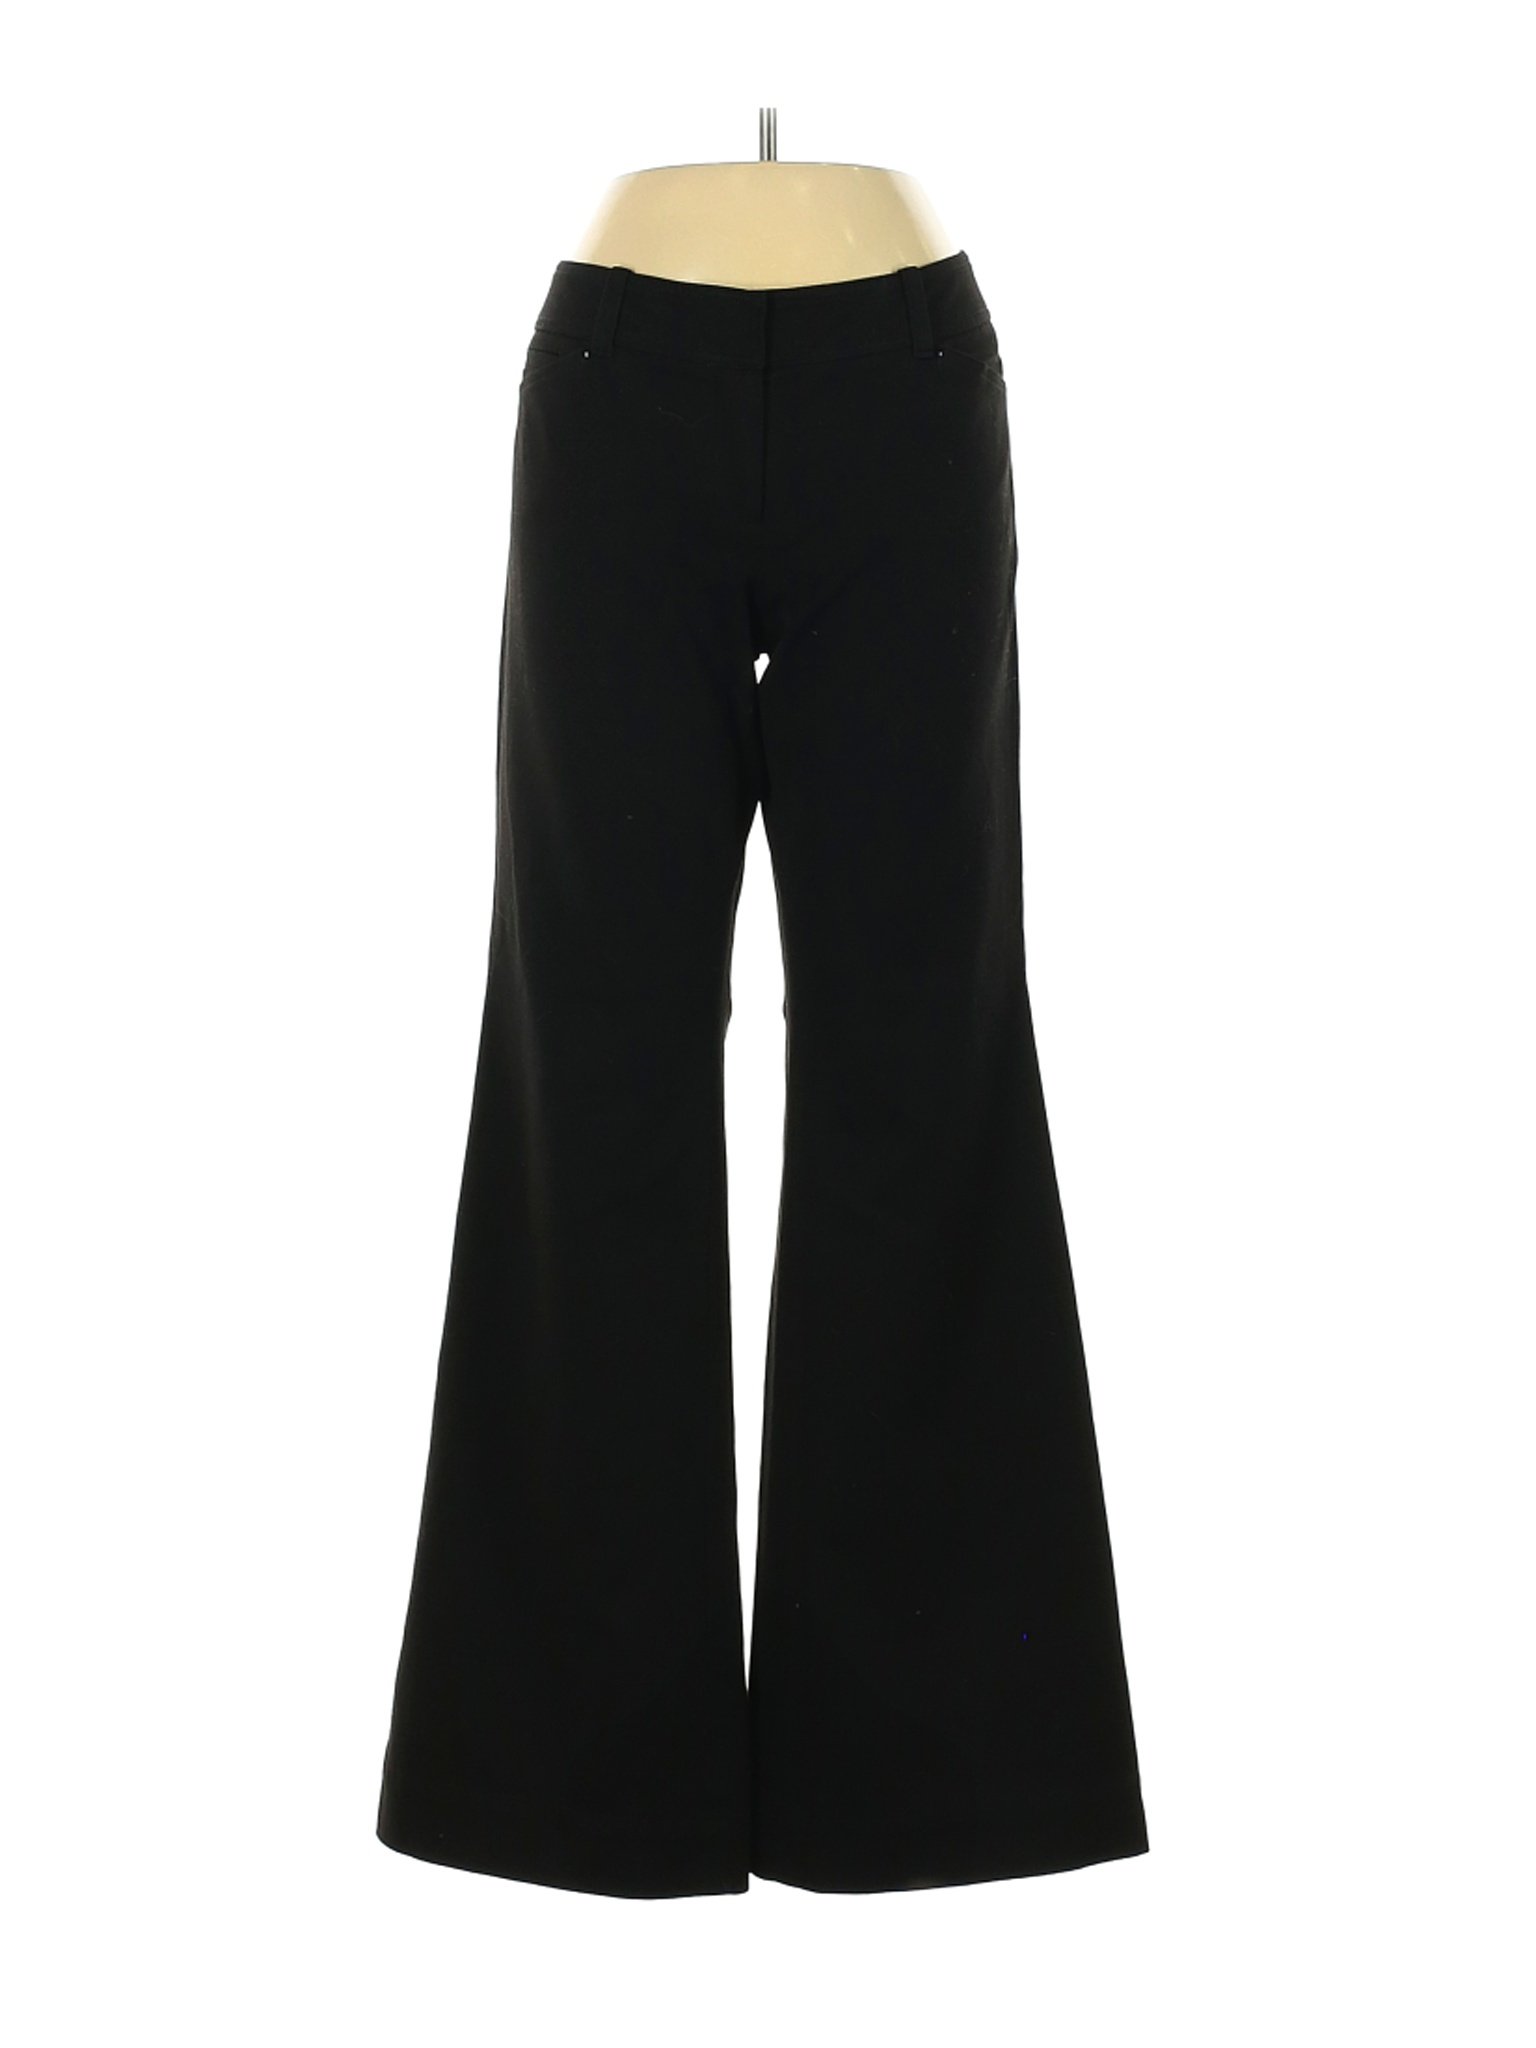 White House Black Market Women Black Dress Pants 8 | eBay